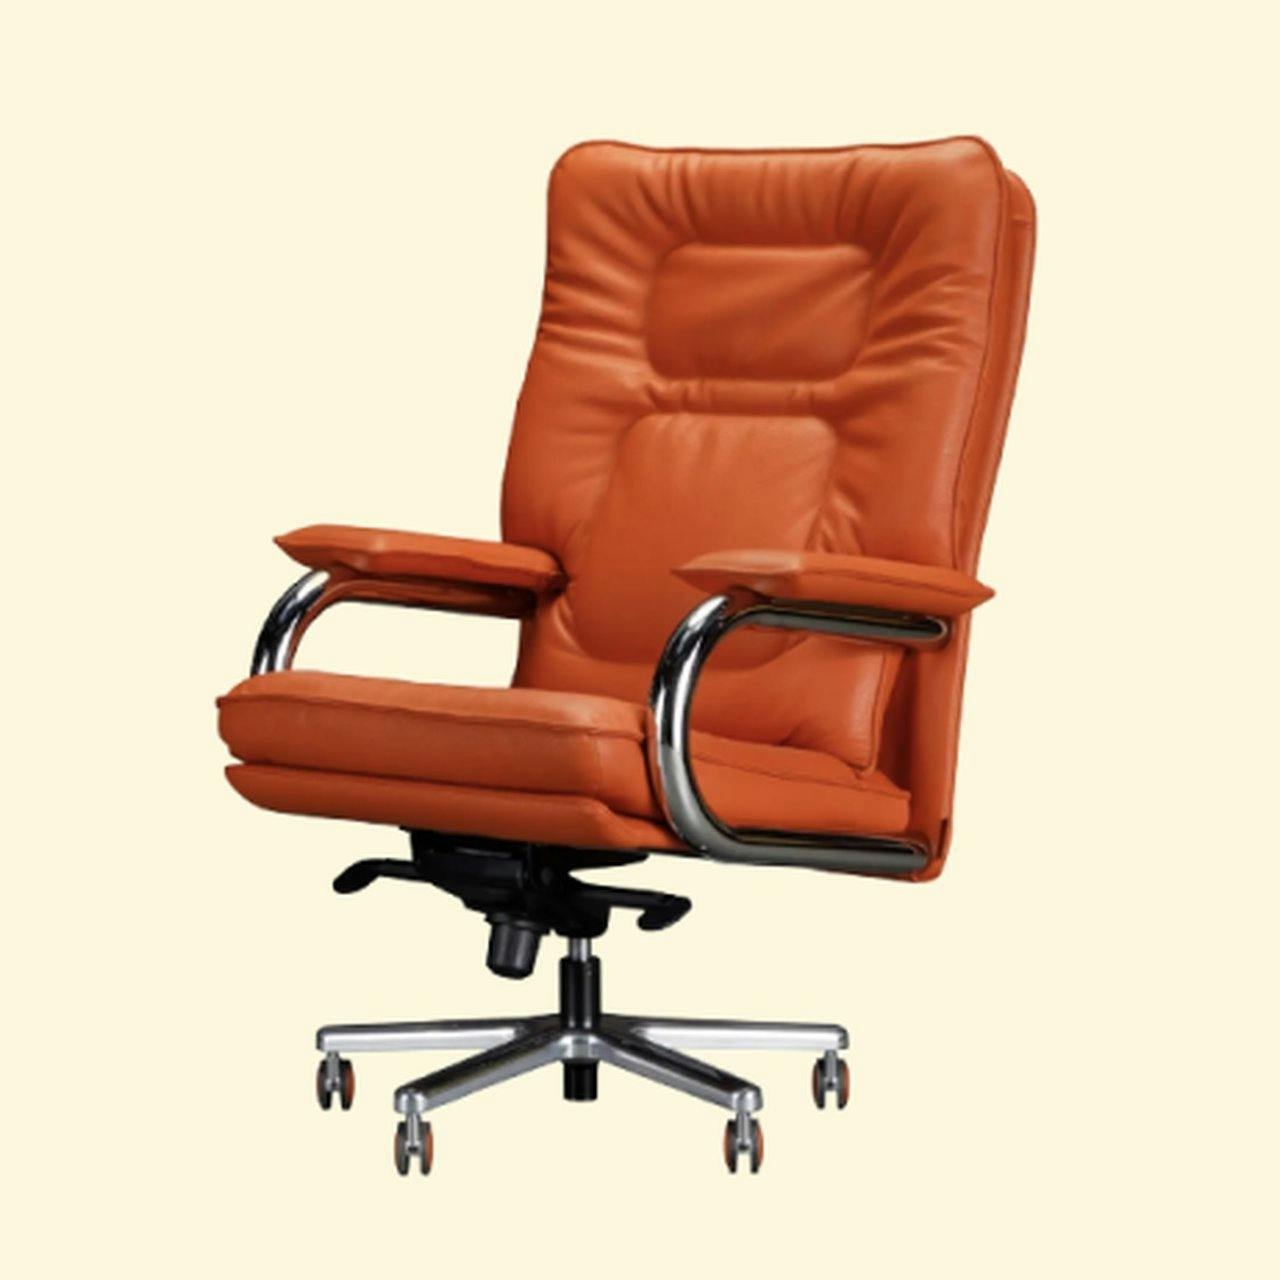 Mid Century Modern Office chairs